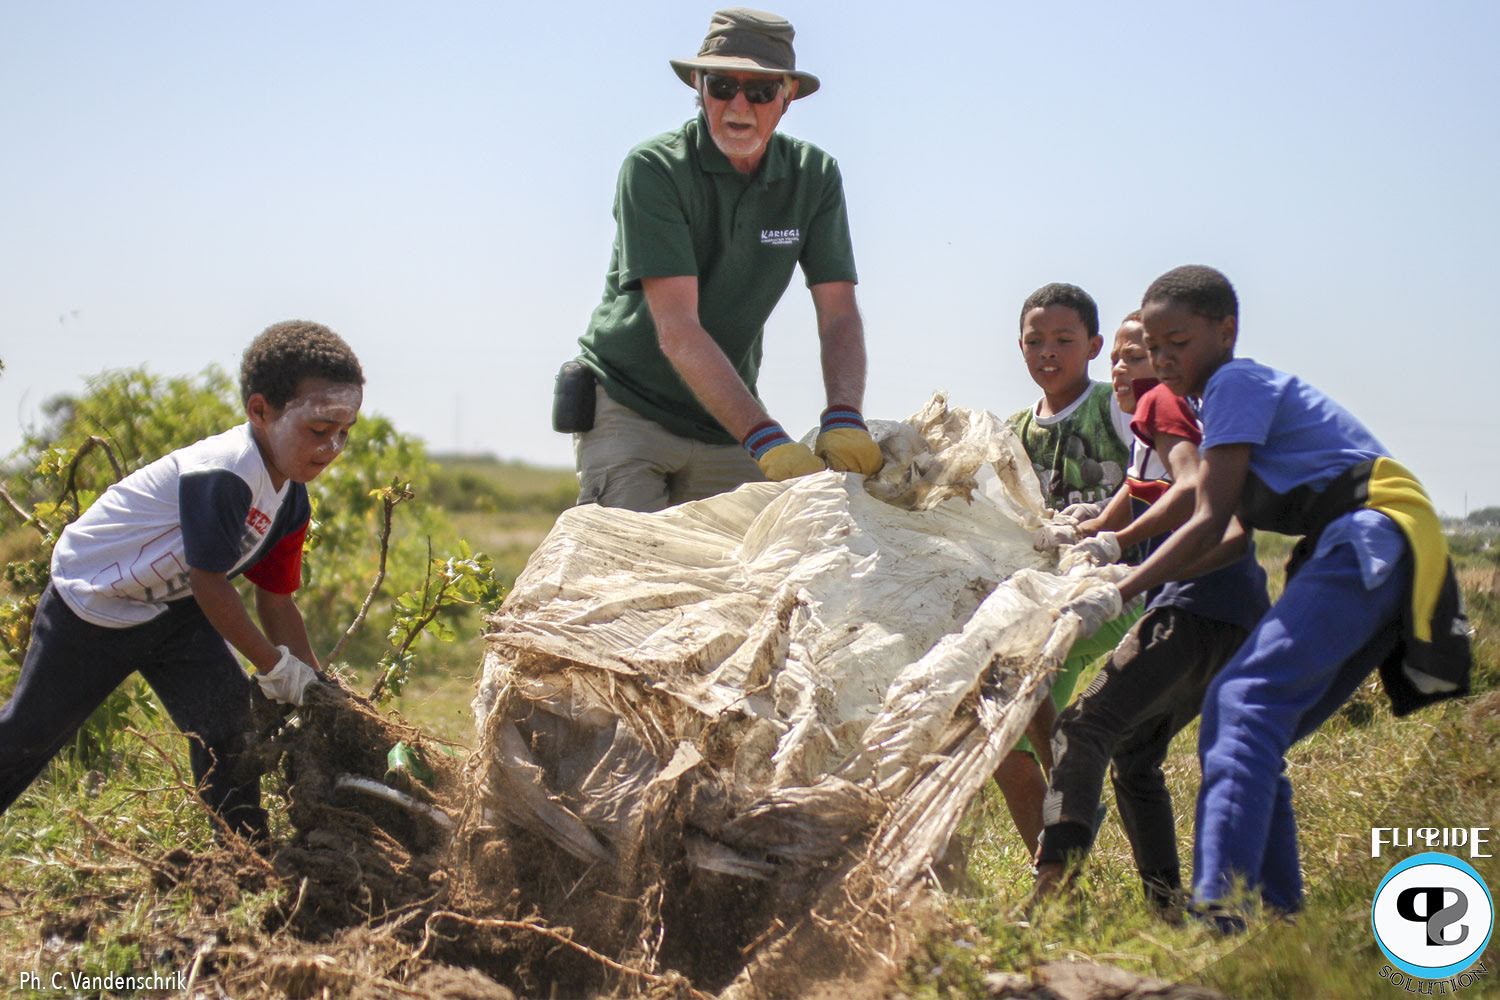 Kariega Foundation 2019 Community Project Highlights: Klipfontein Waste Clean Up